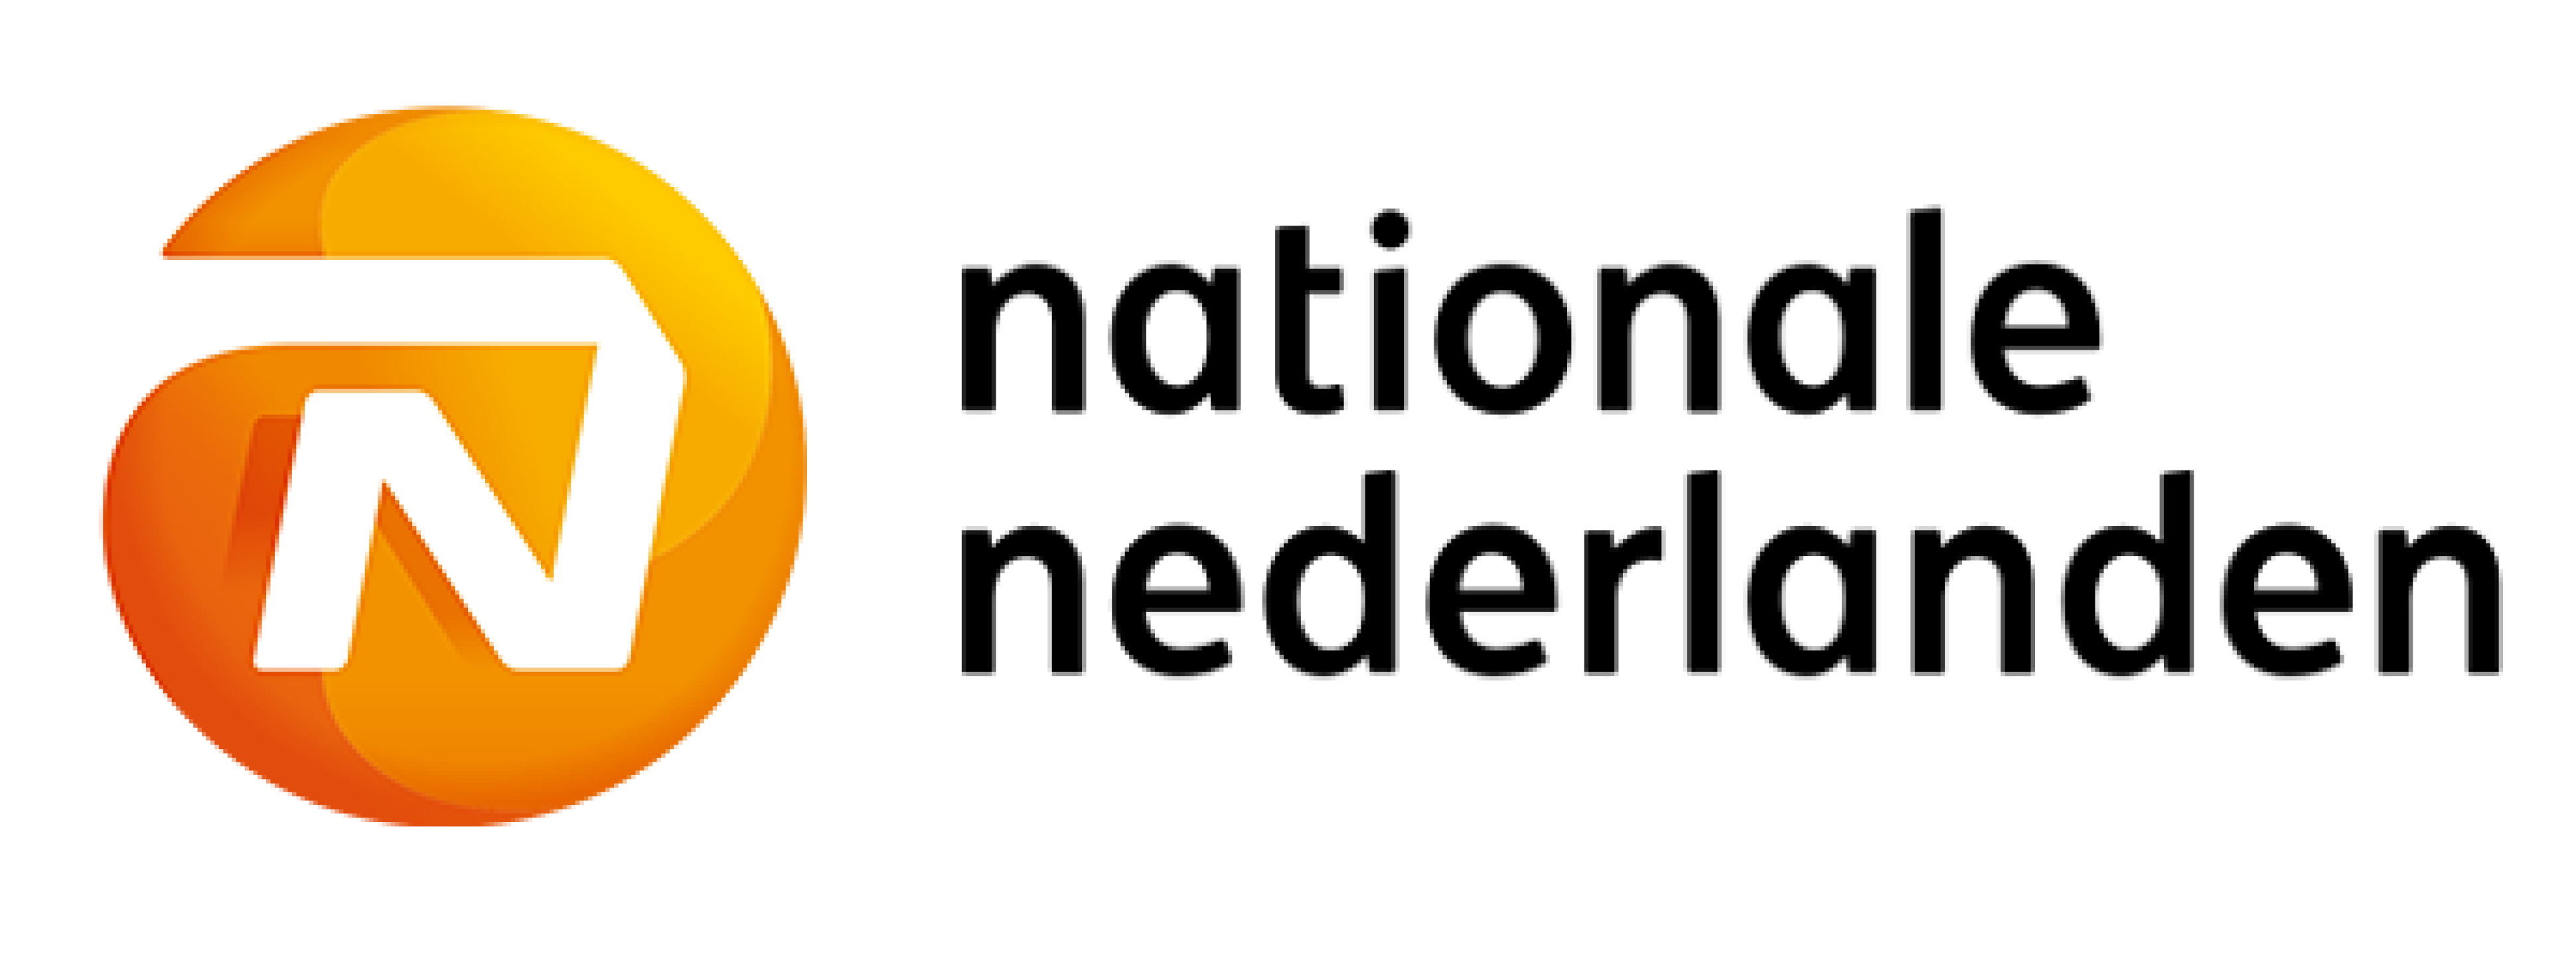 NN logo